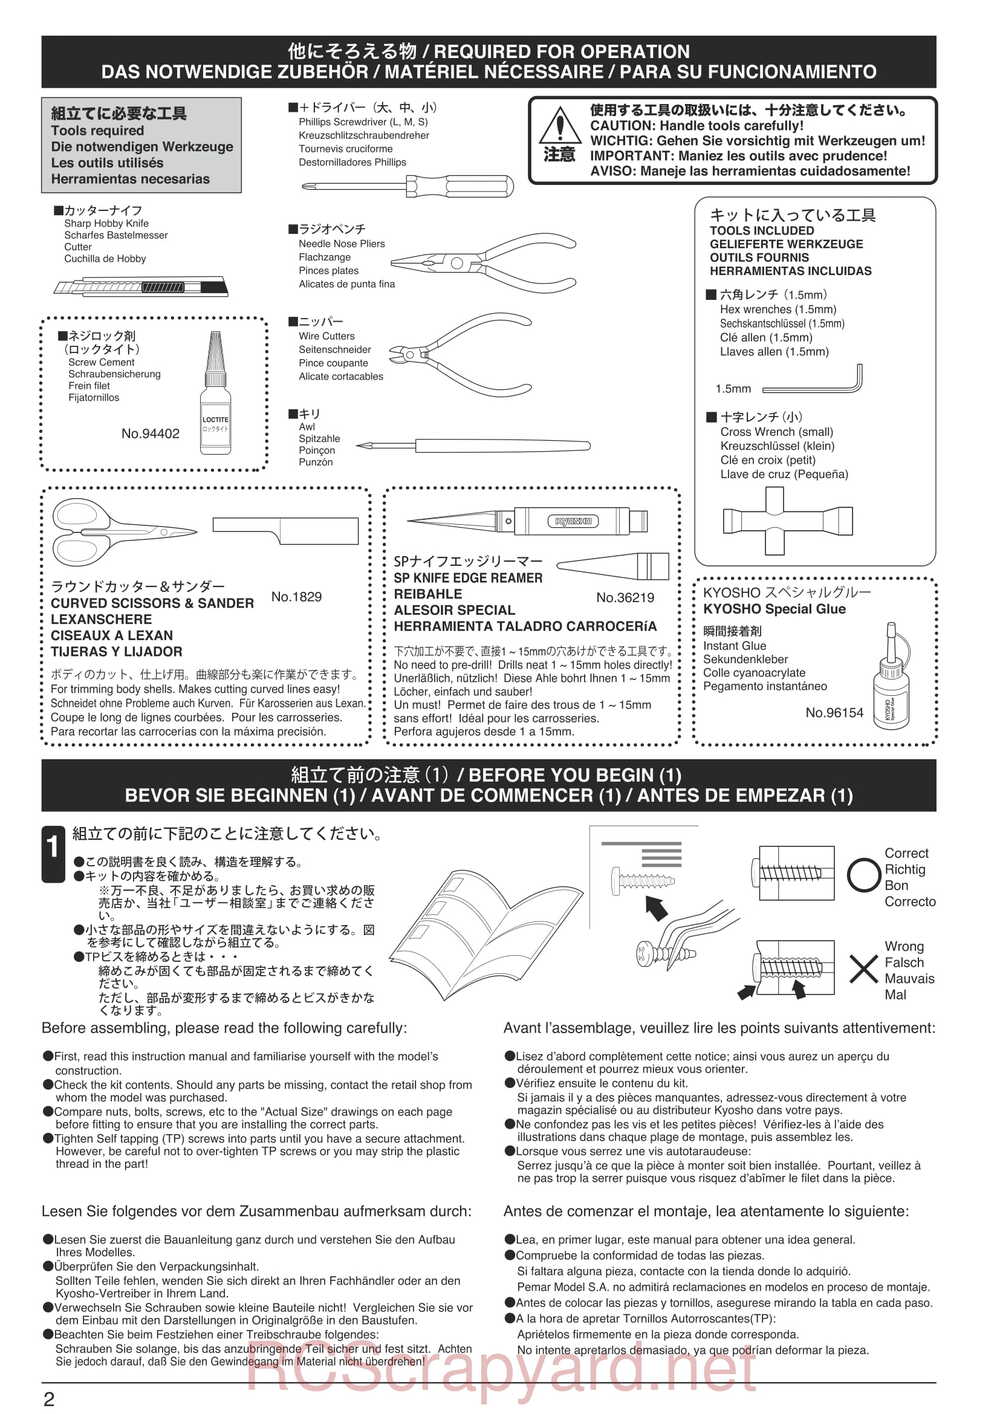 Kyosho - 30903 - EP FAZER - Manual - Page 02